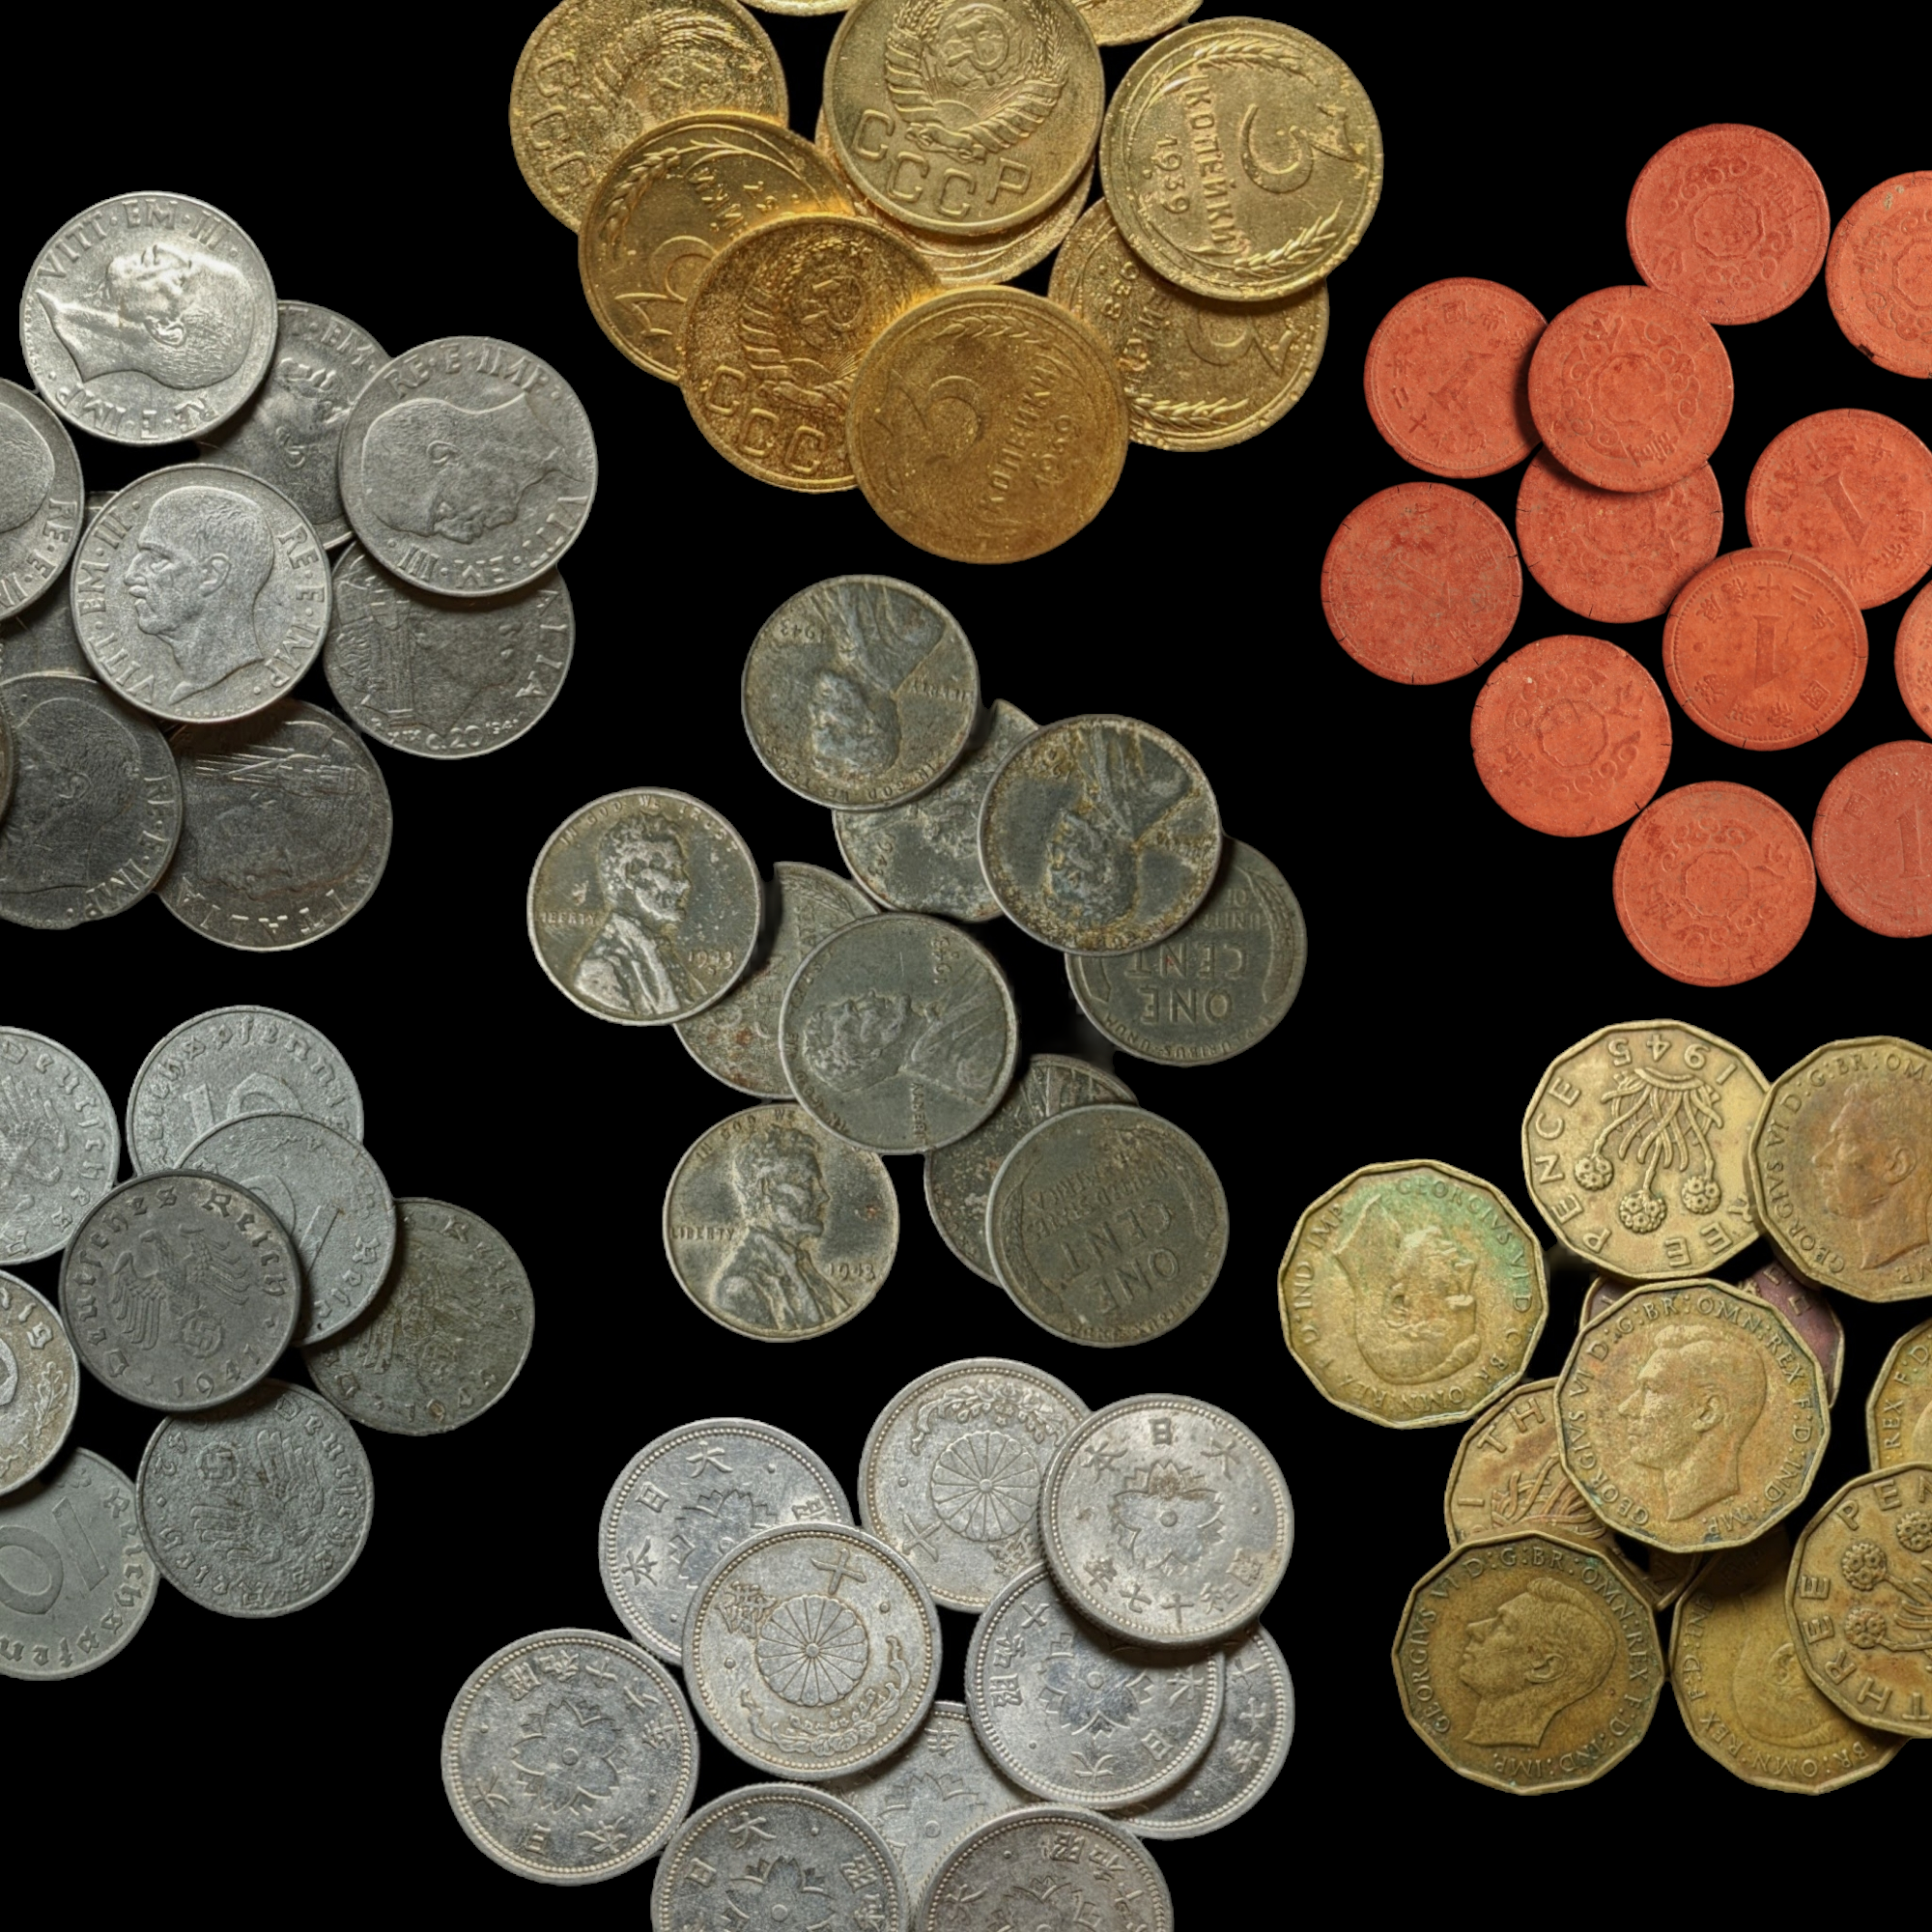 Civil War Gold Coins for Sale | Buy Rare Civil War Gold Coins